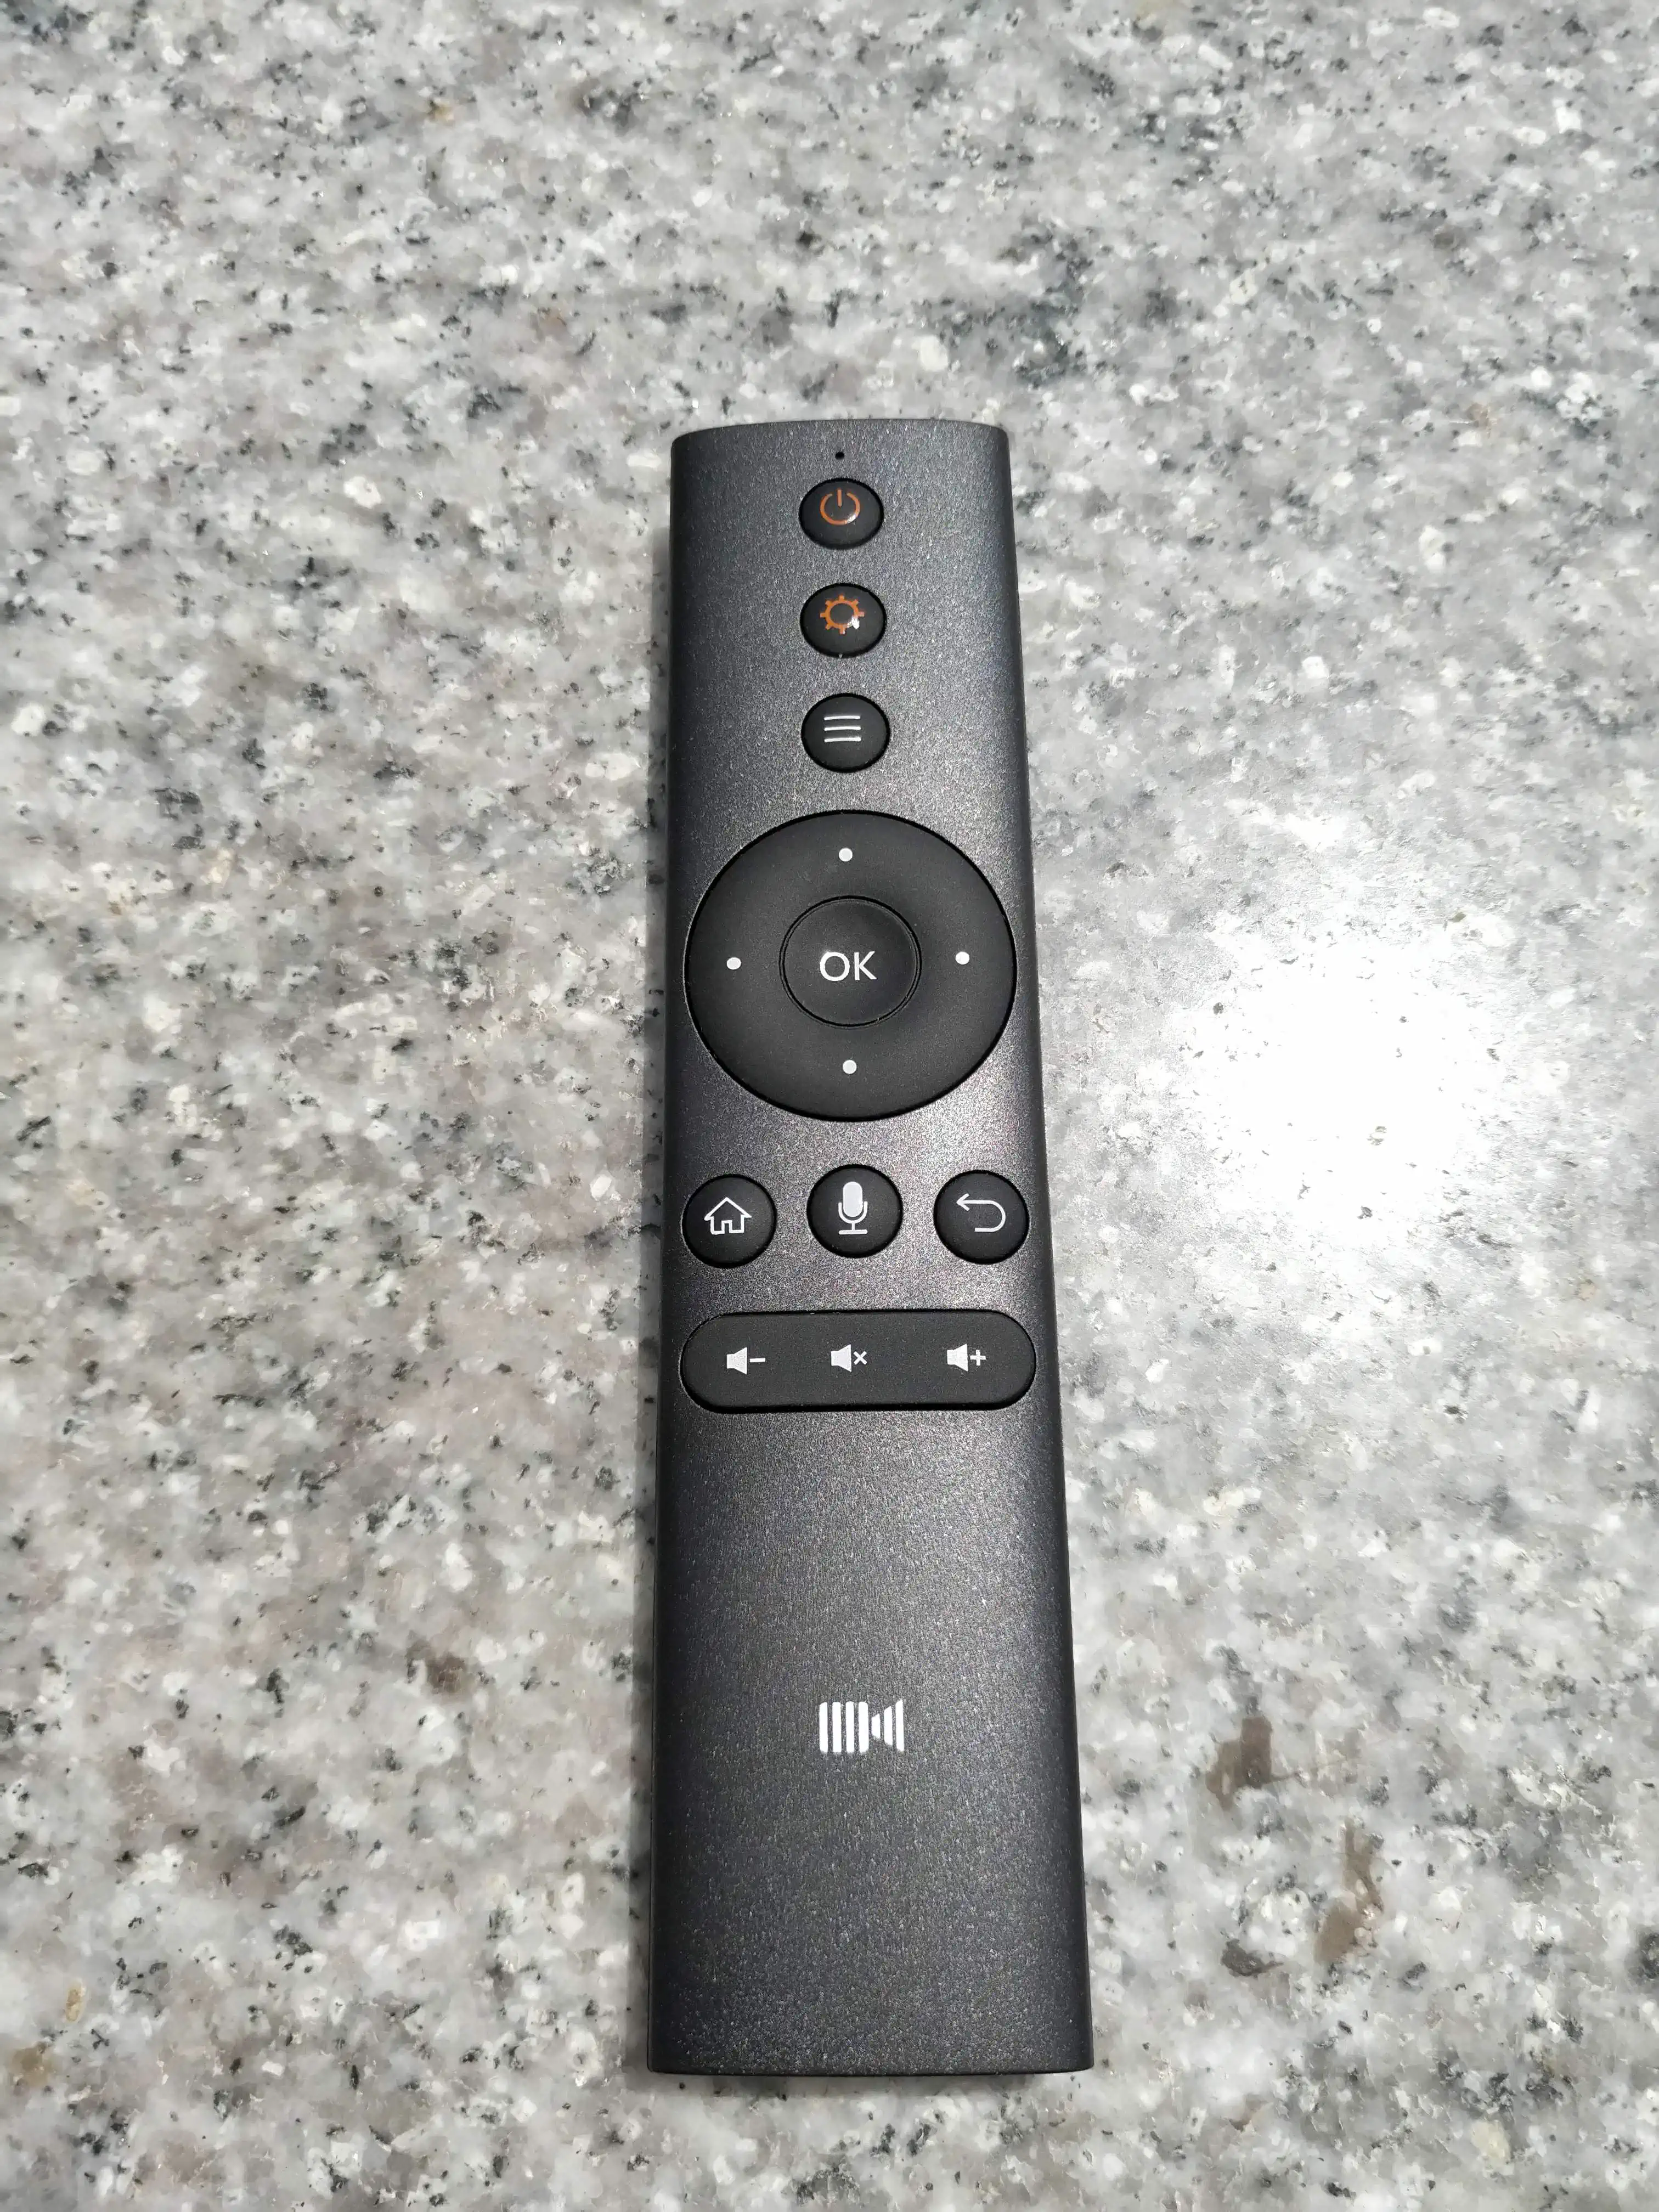 Remote Control for Kaiboer X5 TV Box Bluetooth Brand New - $10.99